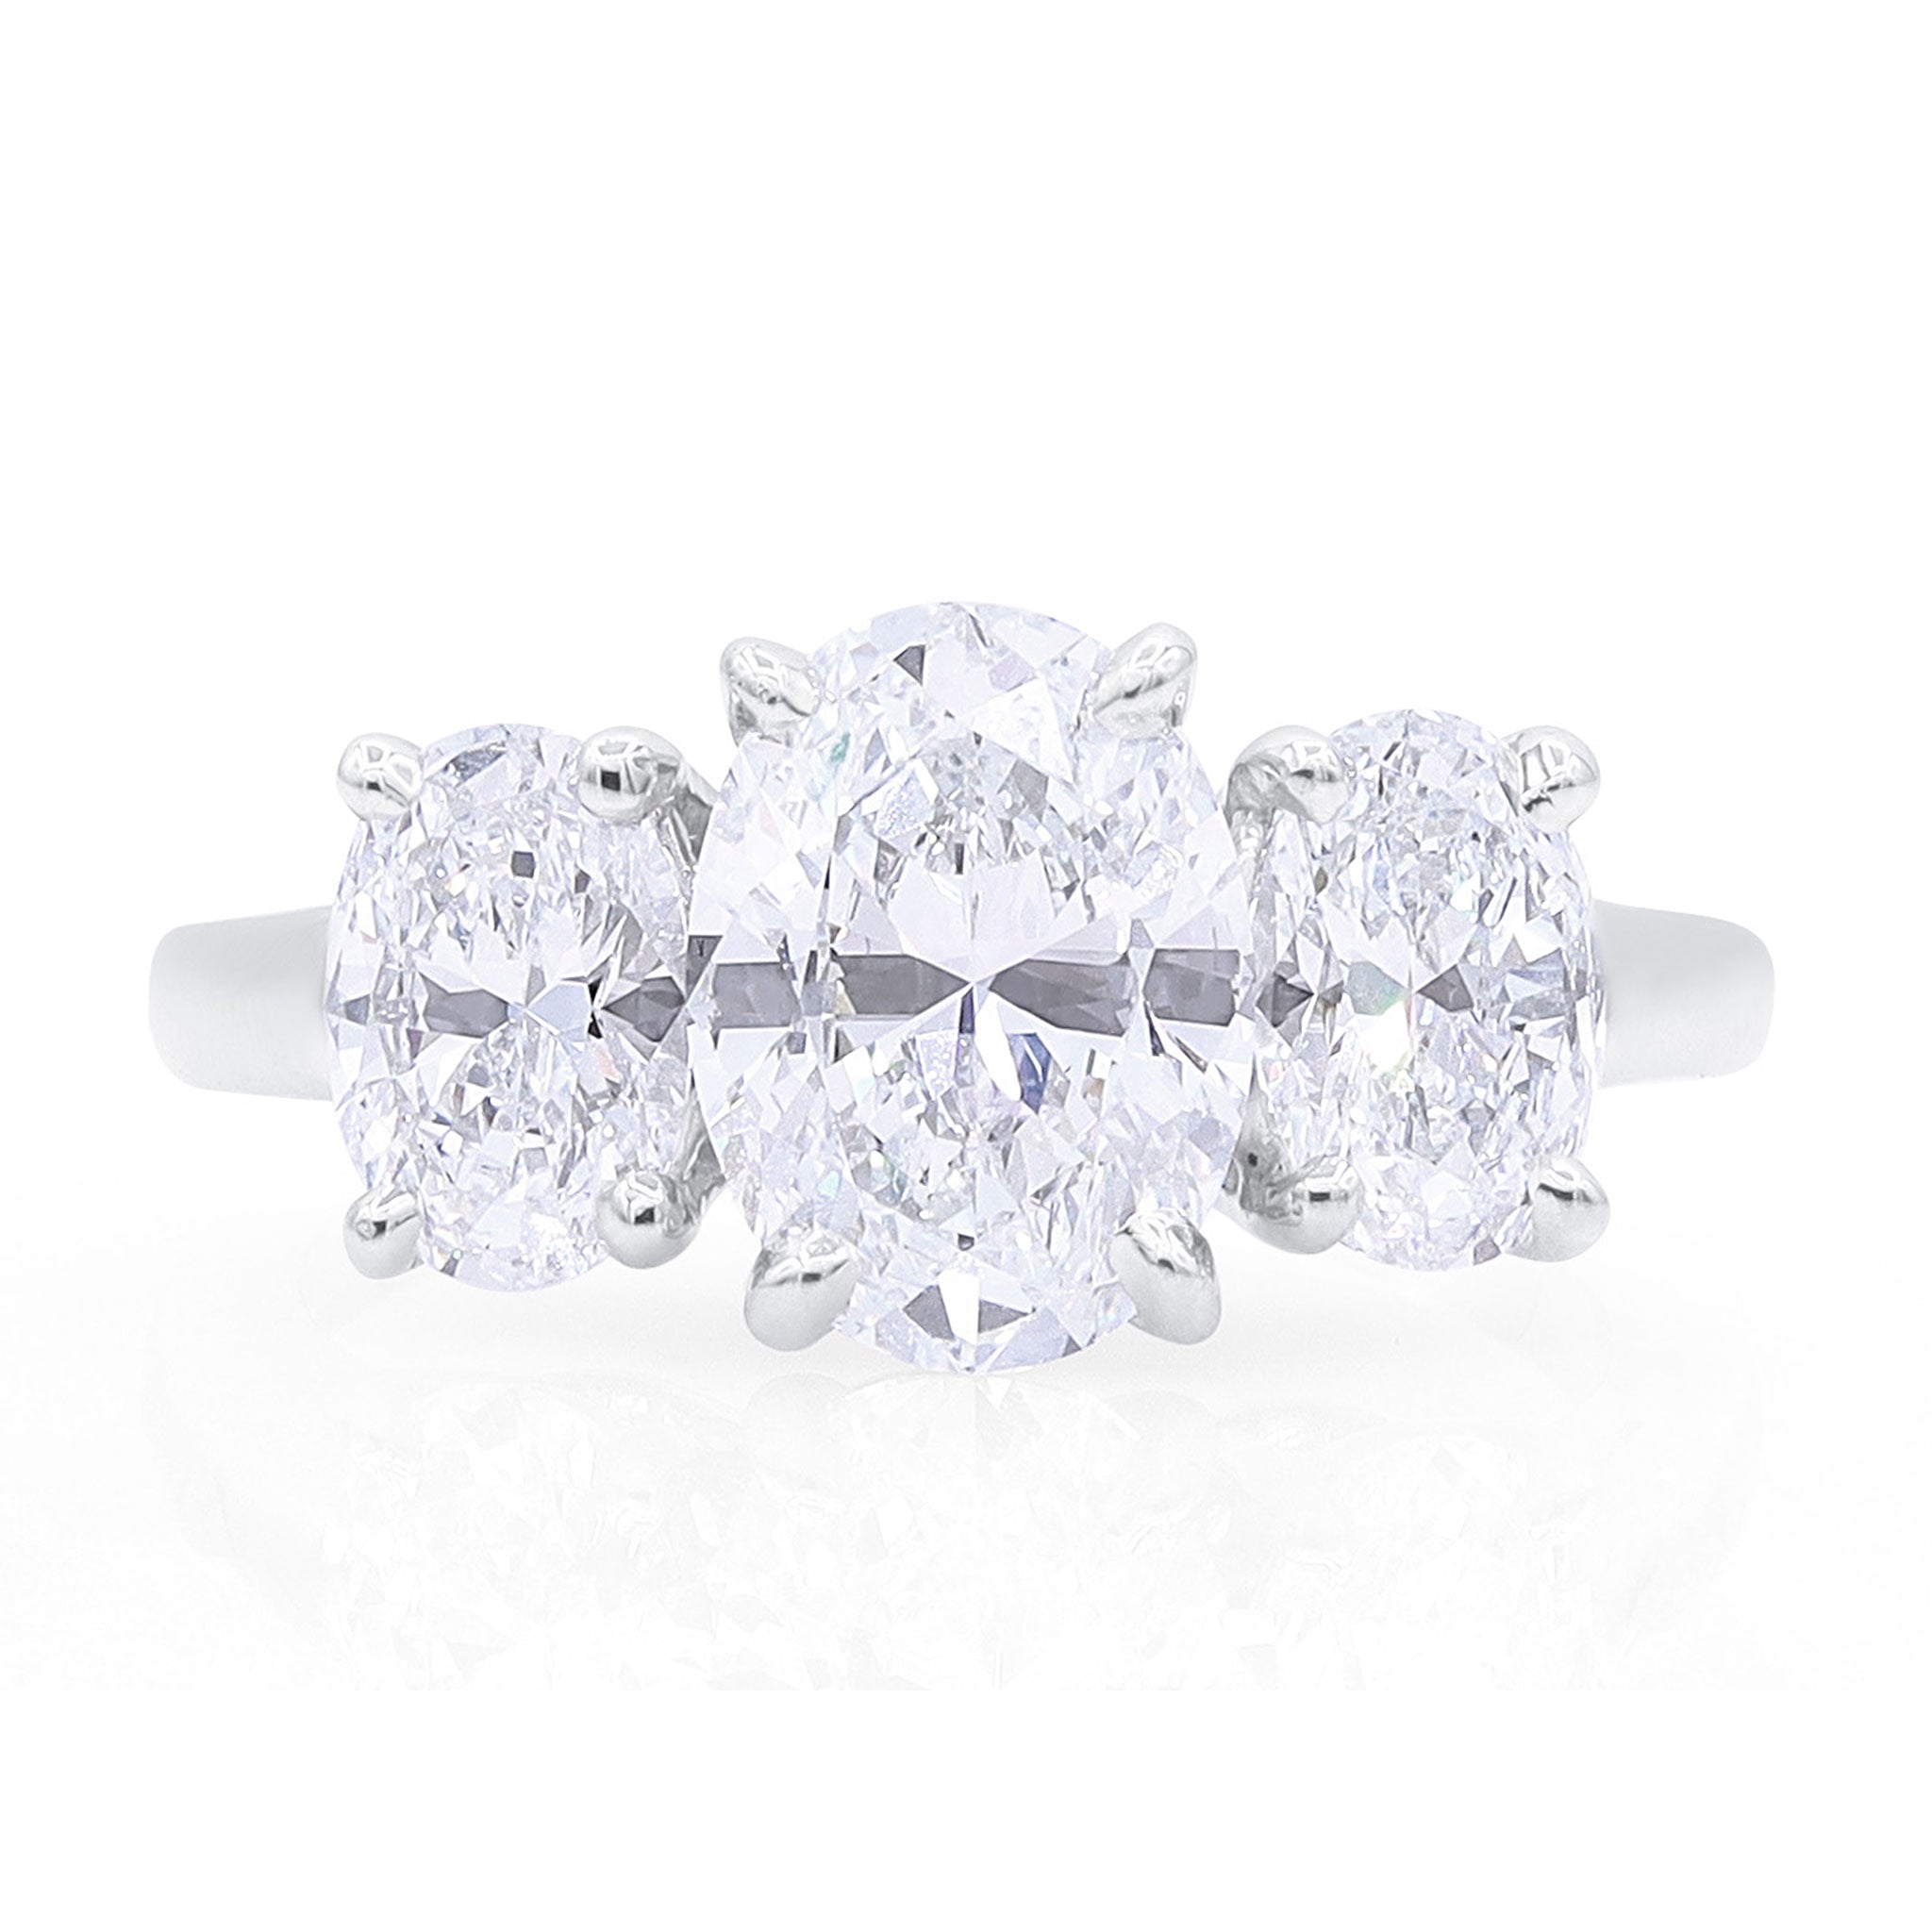 Oscar Heyman platinum, 3-stone oval diamond ring - Be On Park